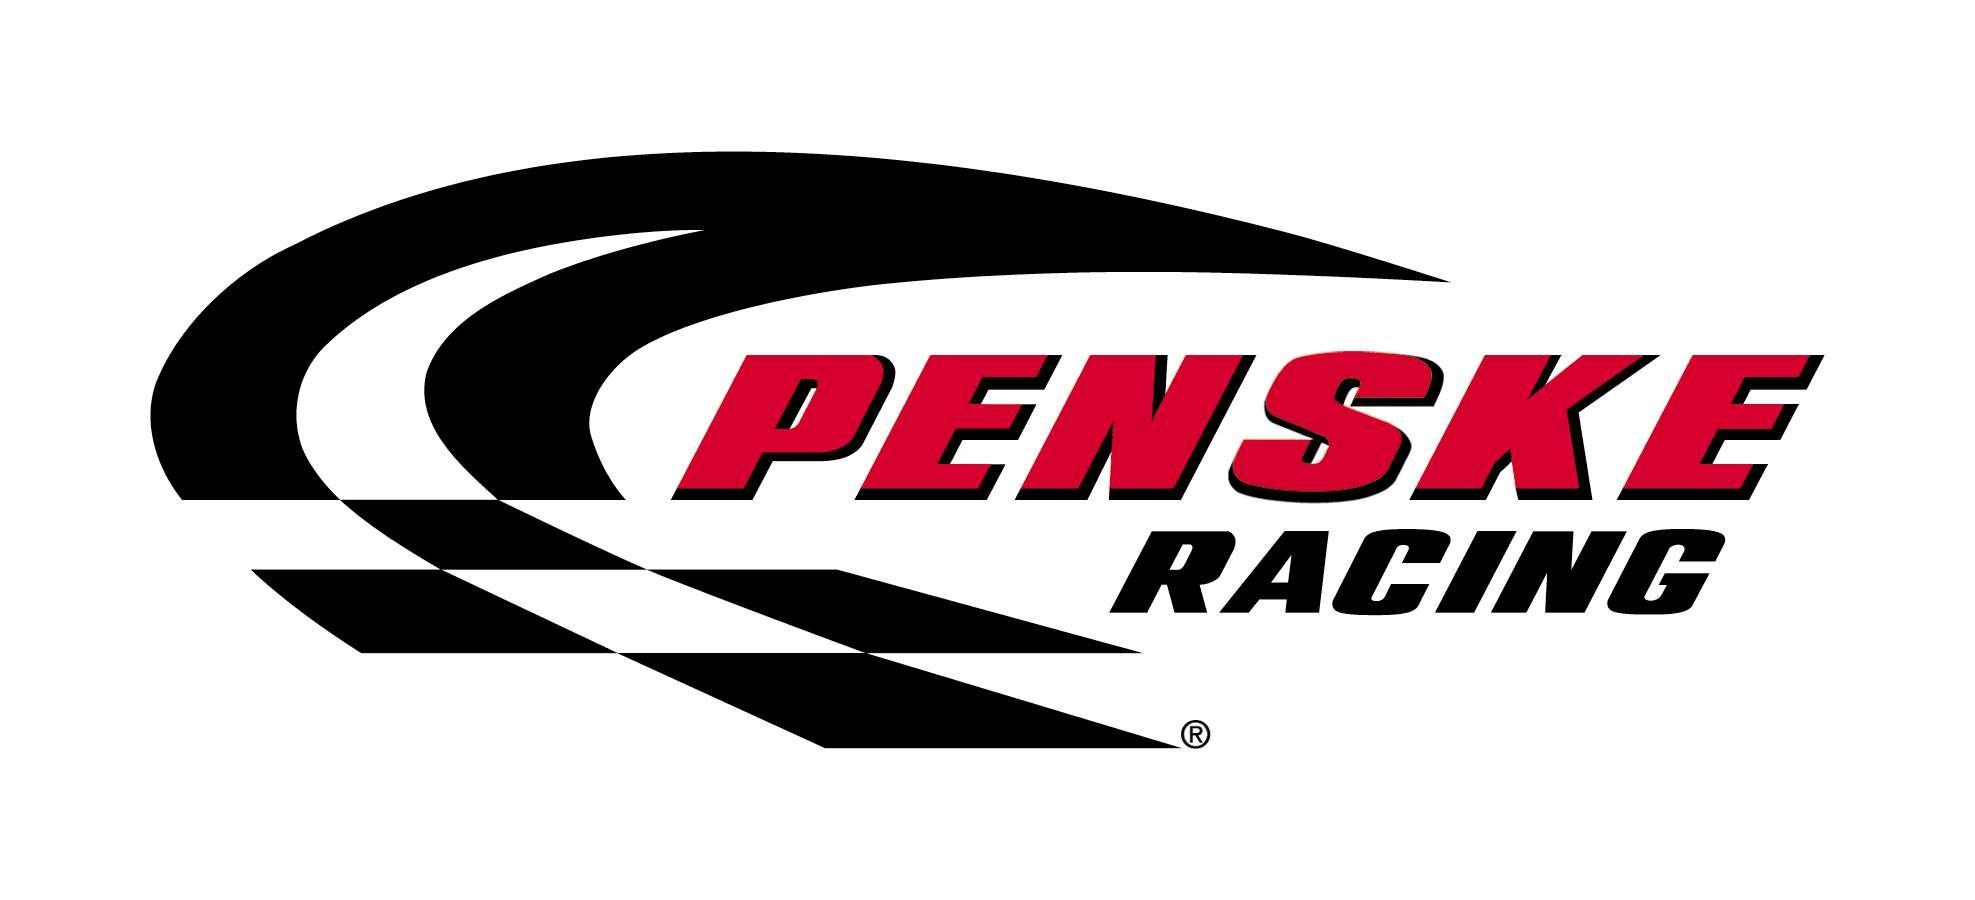 NASCAR Race Track Logo - Penske Racing. Sports. Racing, Indy cars, Nascar